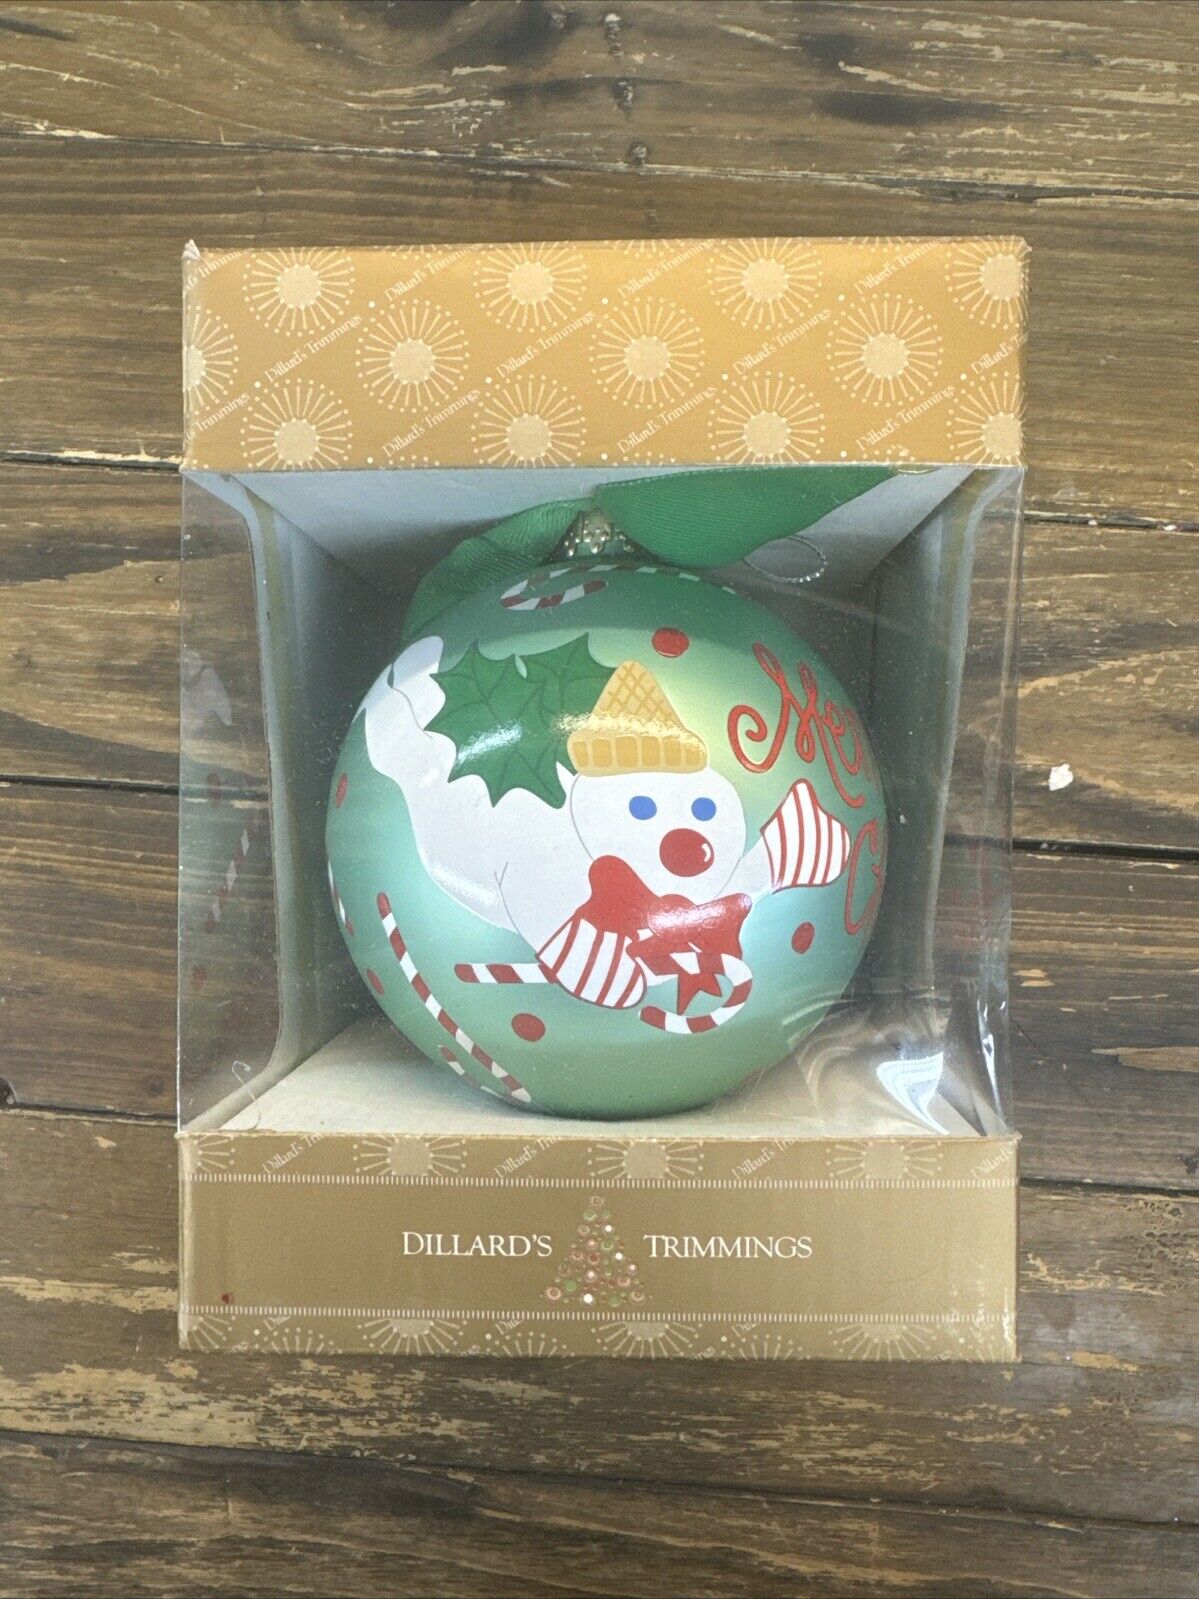 Mr. Bingle Green Glass Ball Ornament Box Hand Painted Vintage Merry Christmas